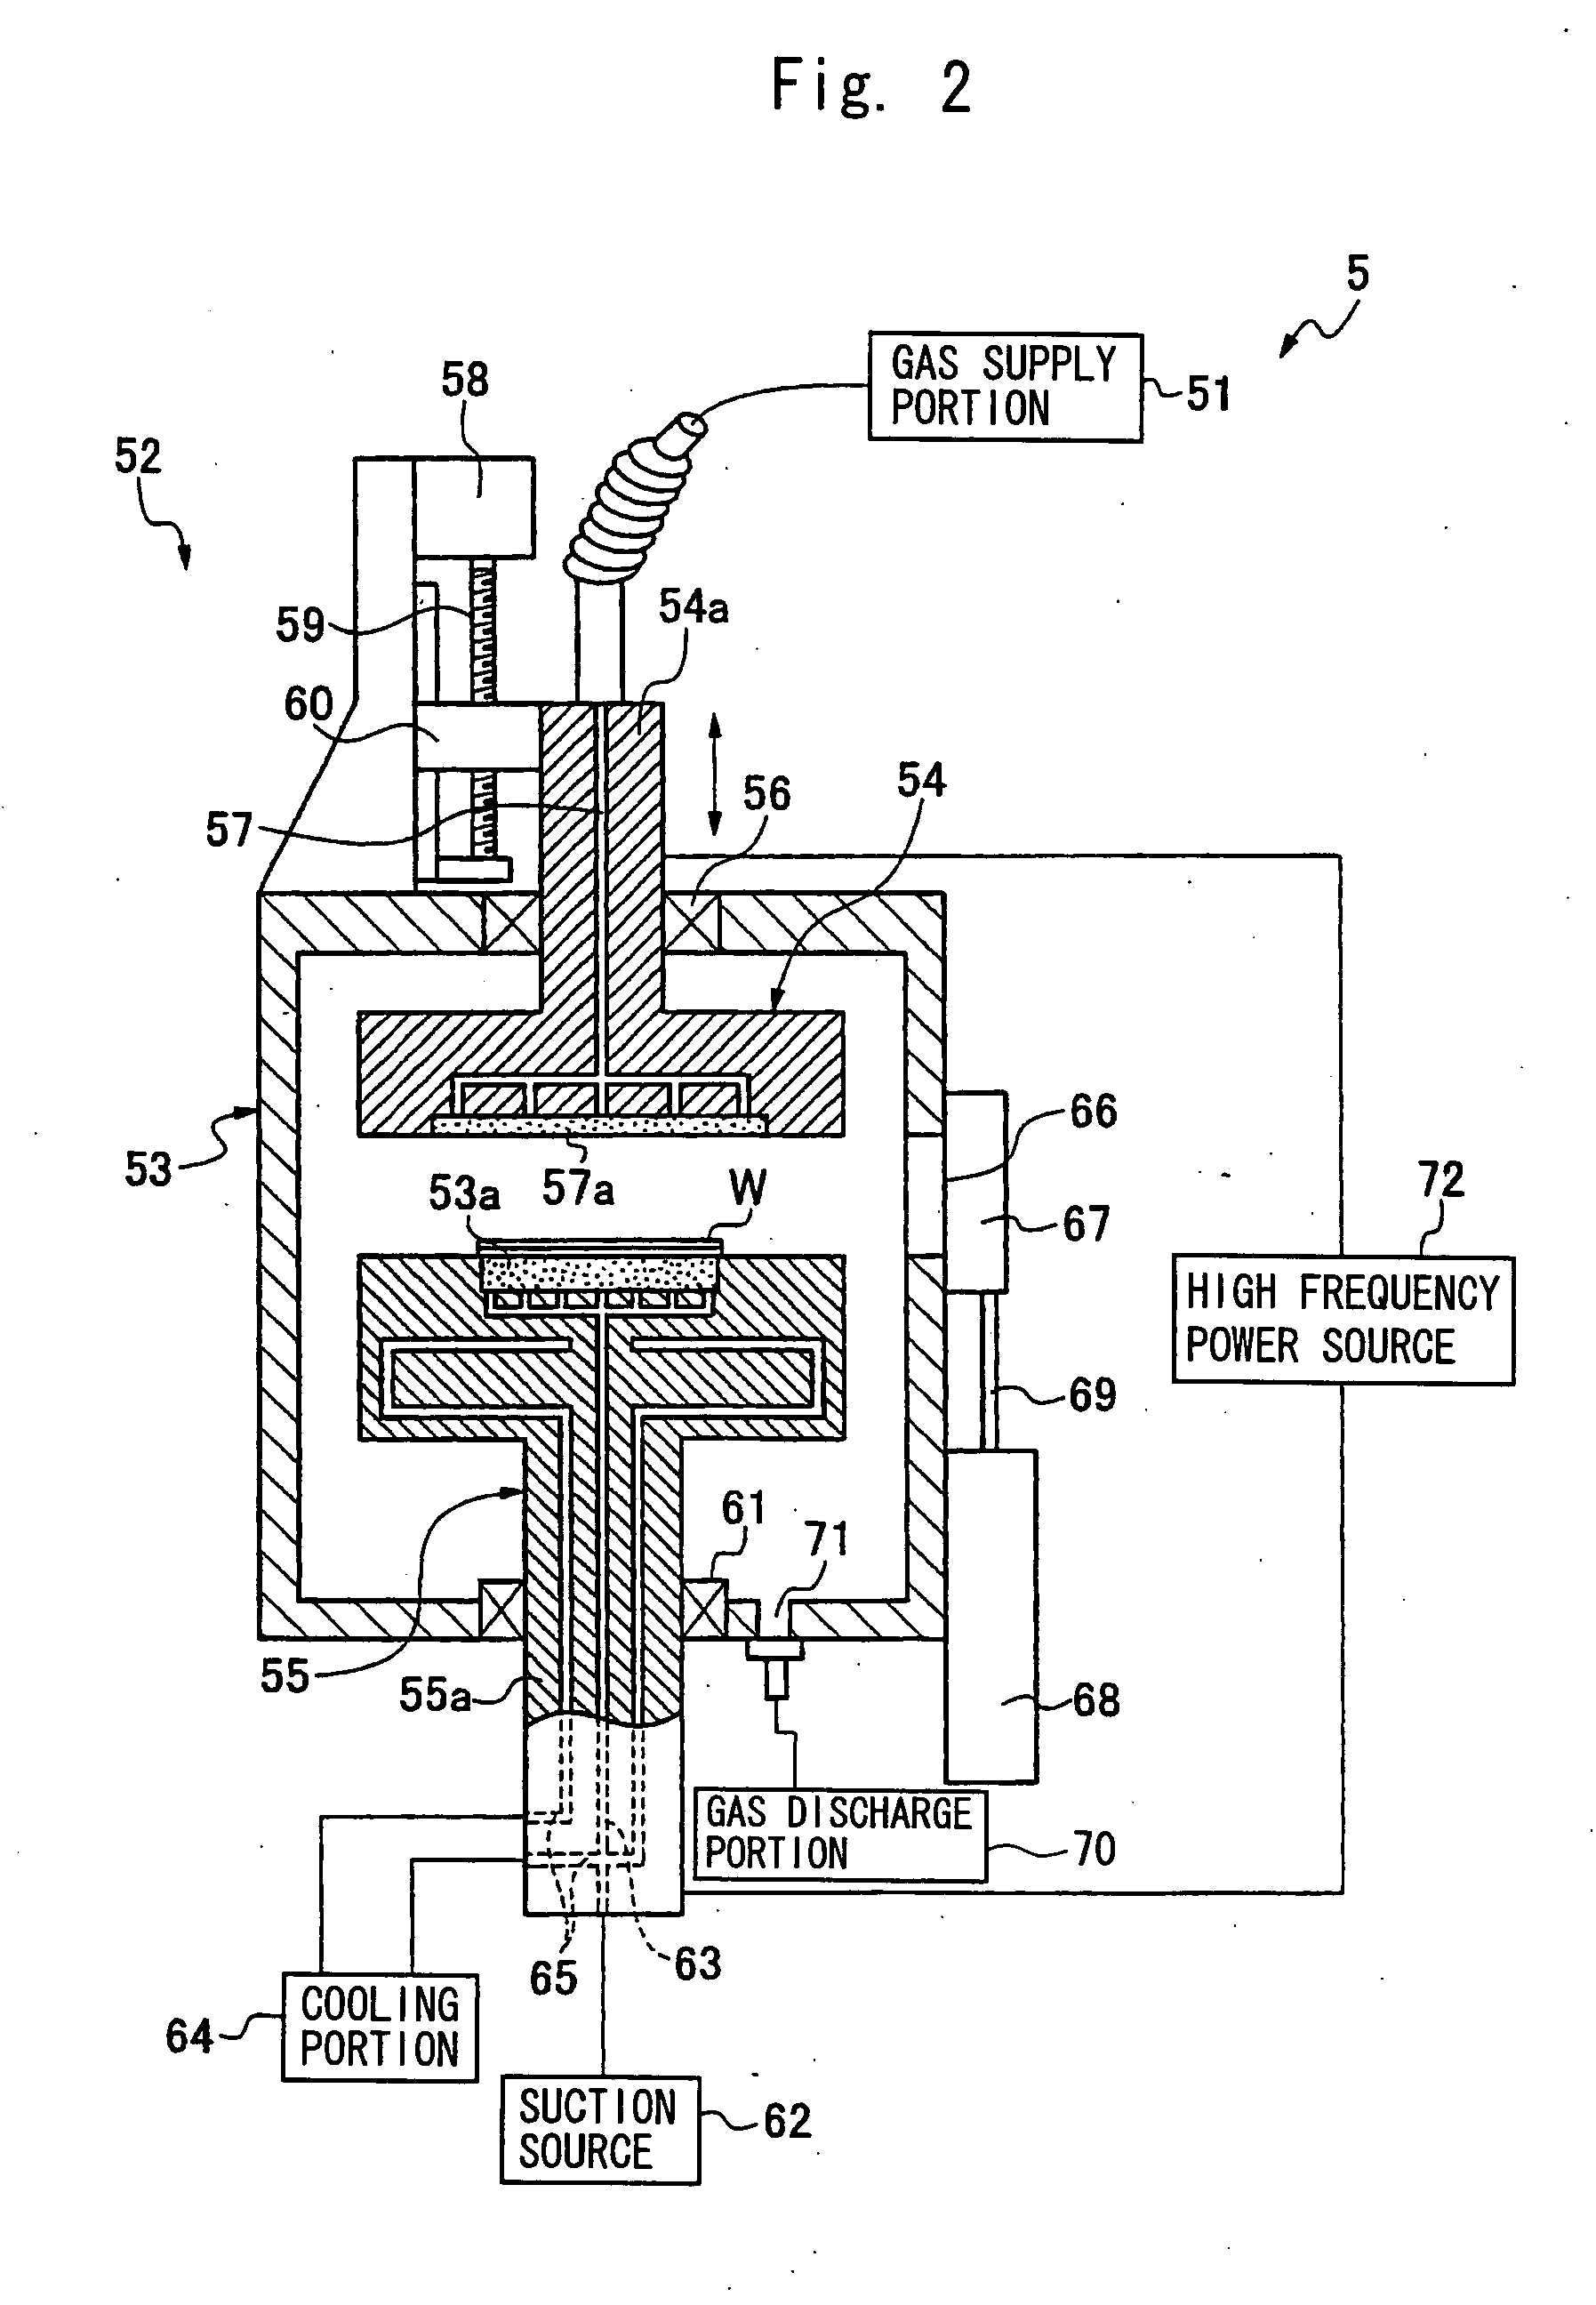 Wafer machining apparatus